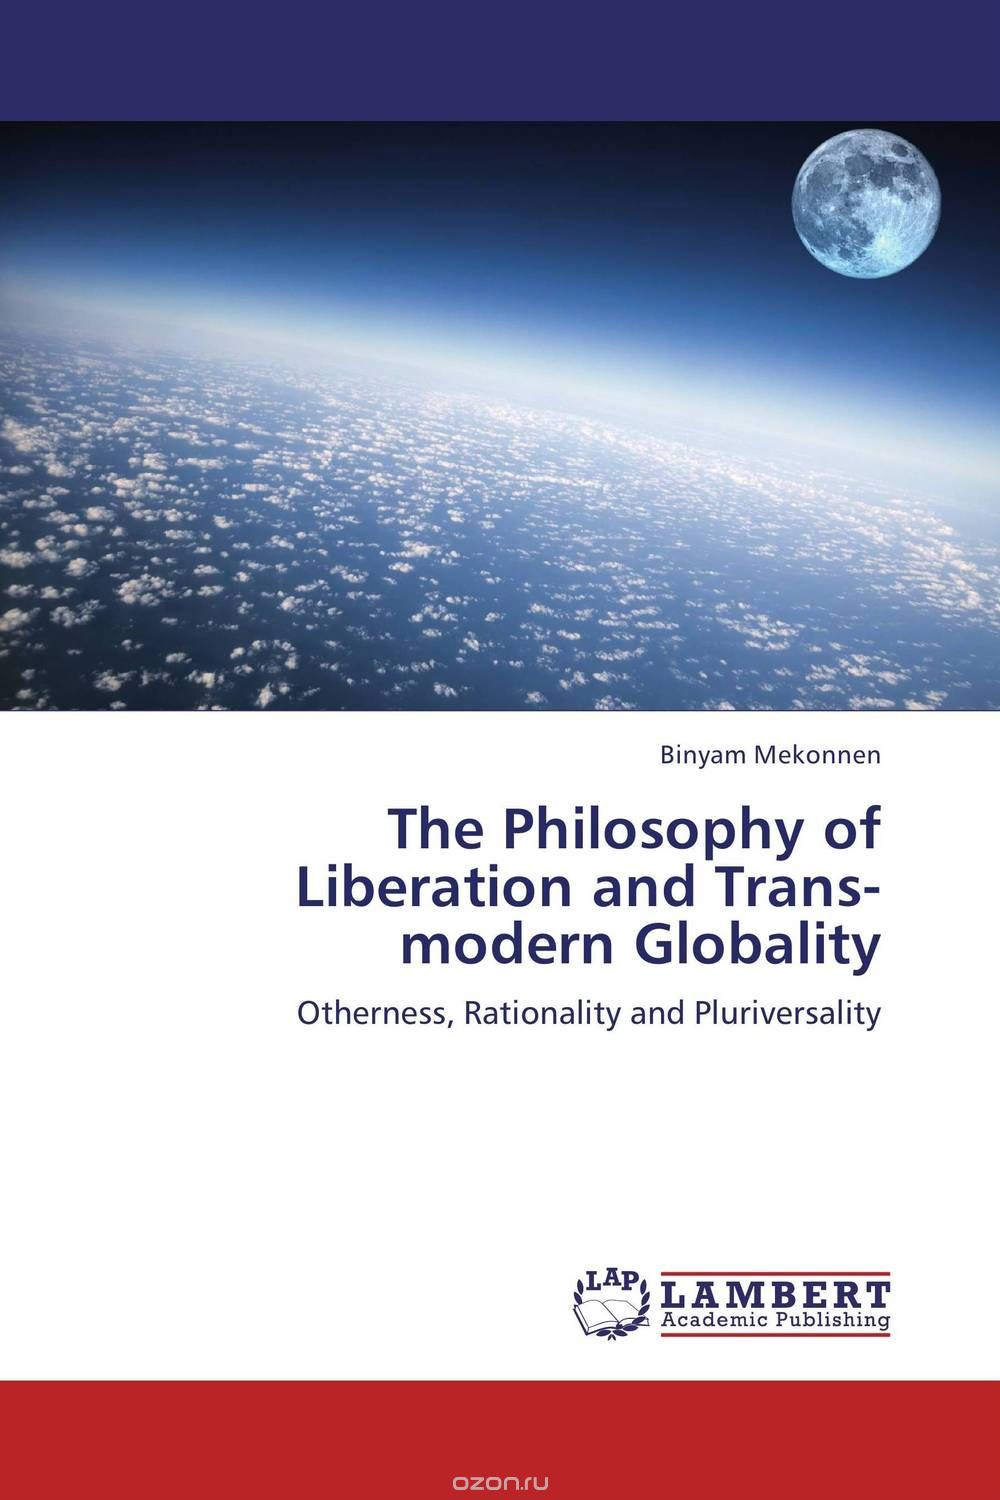 Скачать книгу "The Philosophy of Liberation and Trans-modern Globality"